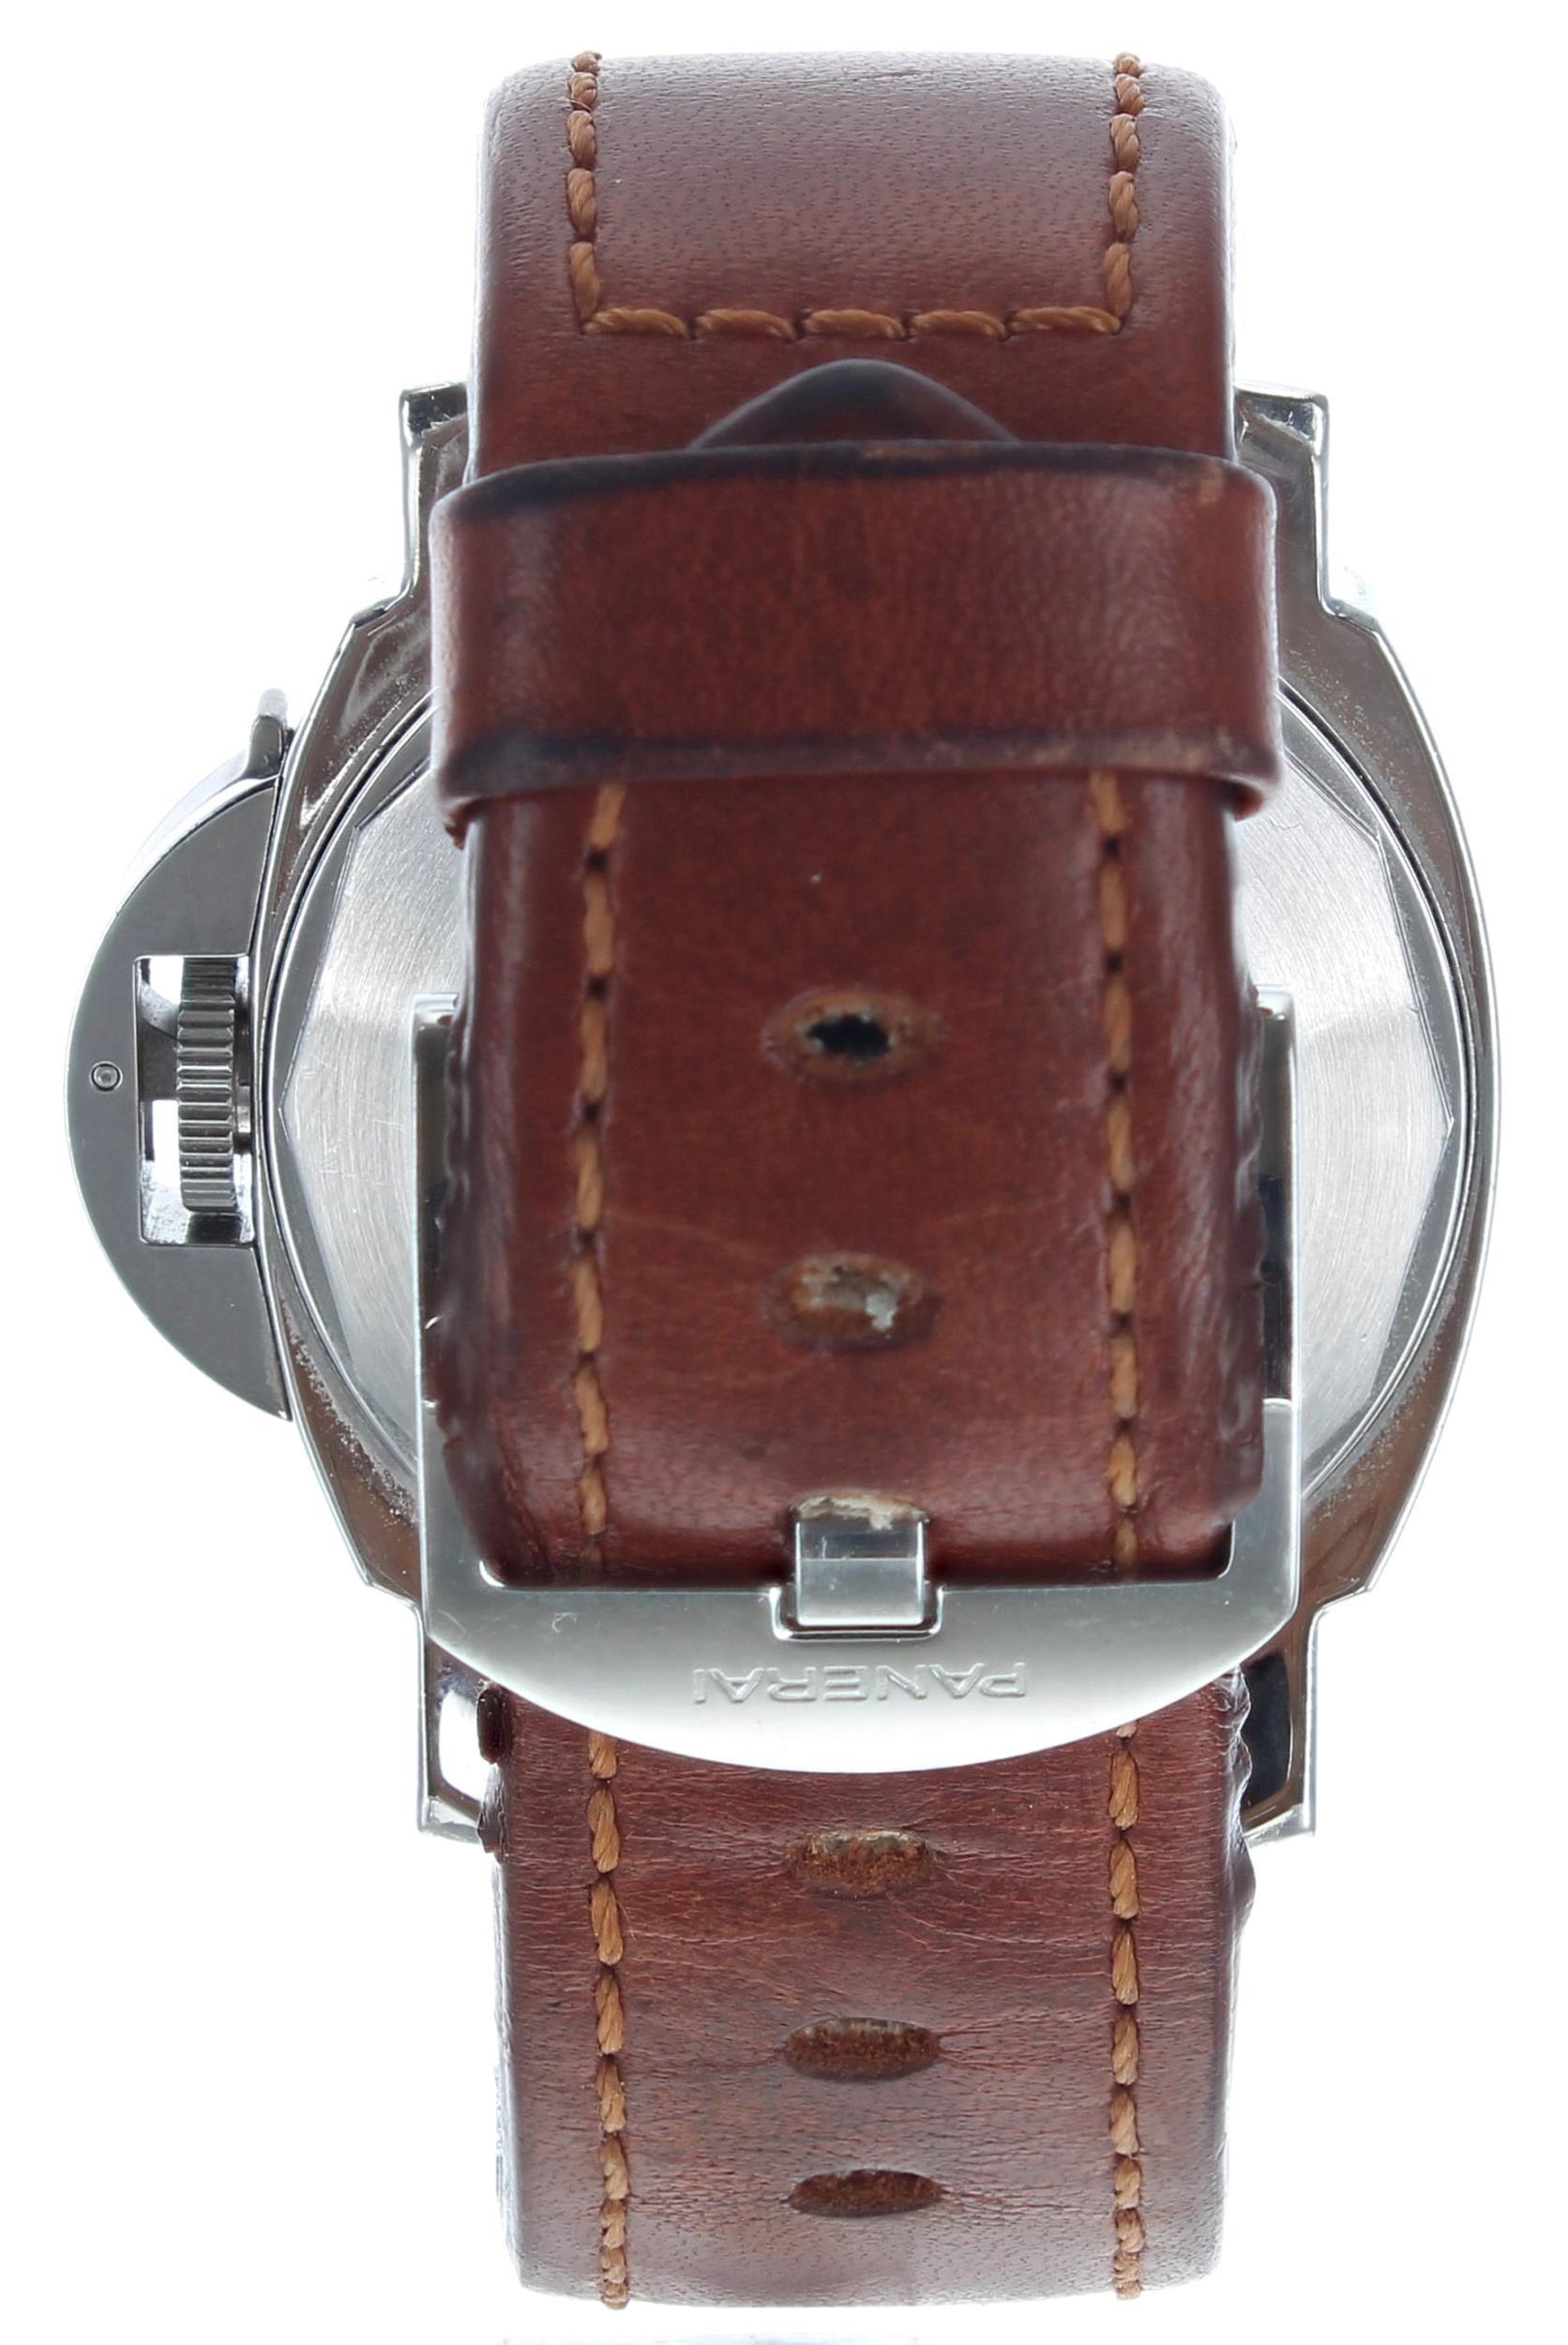 Panerai Luminor Submersible automatic stainless steel gentleman's wristwatch, ref. OP 6561, no. - Bild 4 aus 5